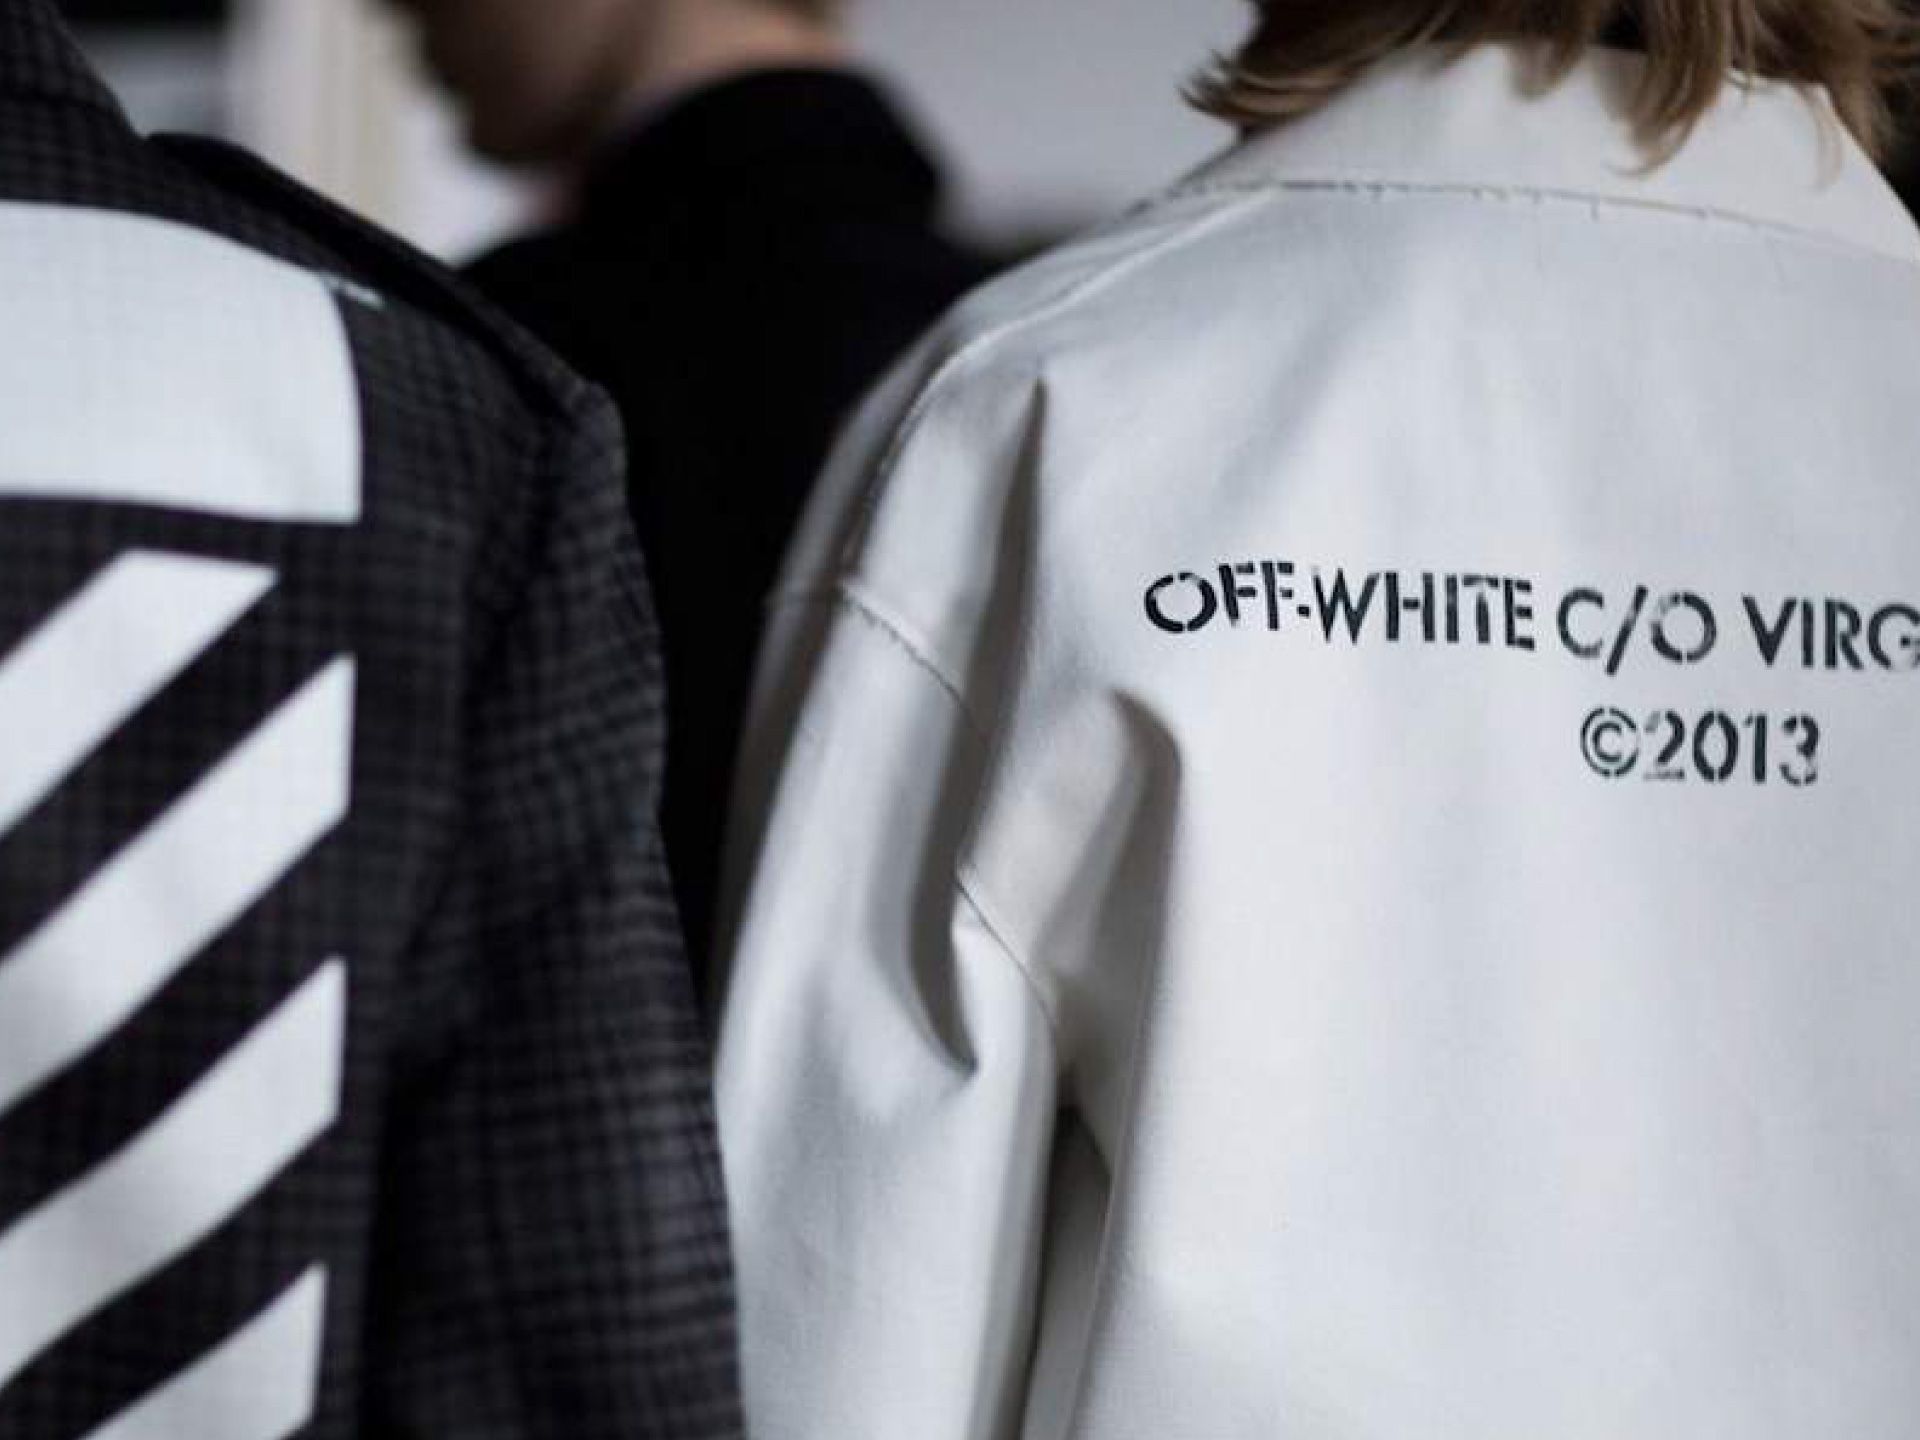 OFF-WHITE(オフホワイト)買取専門店